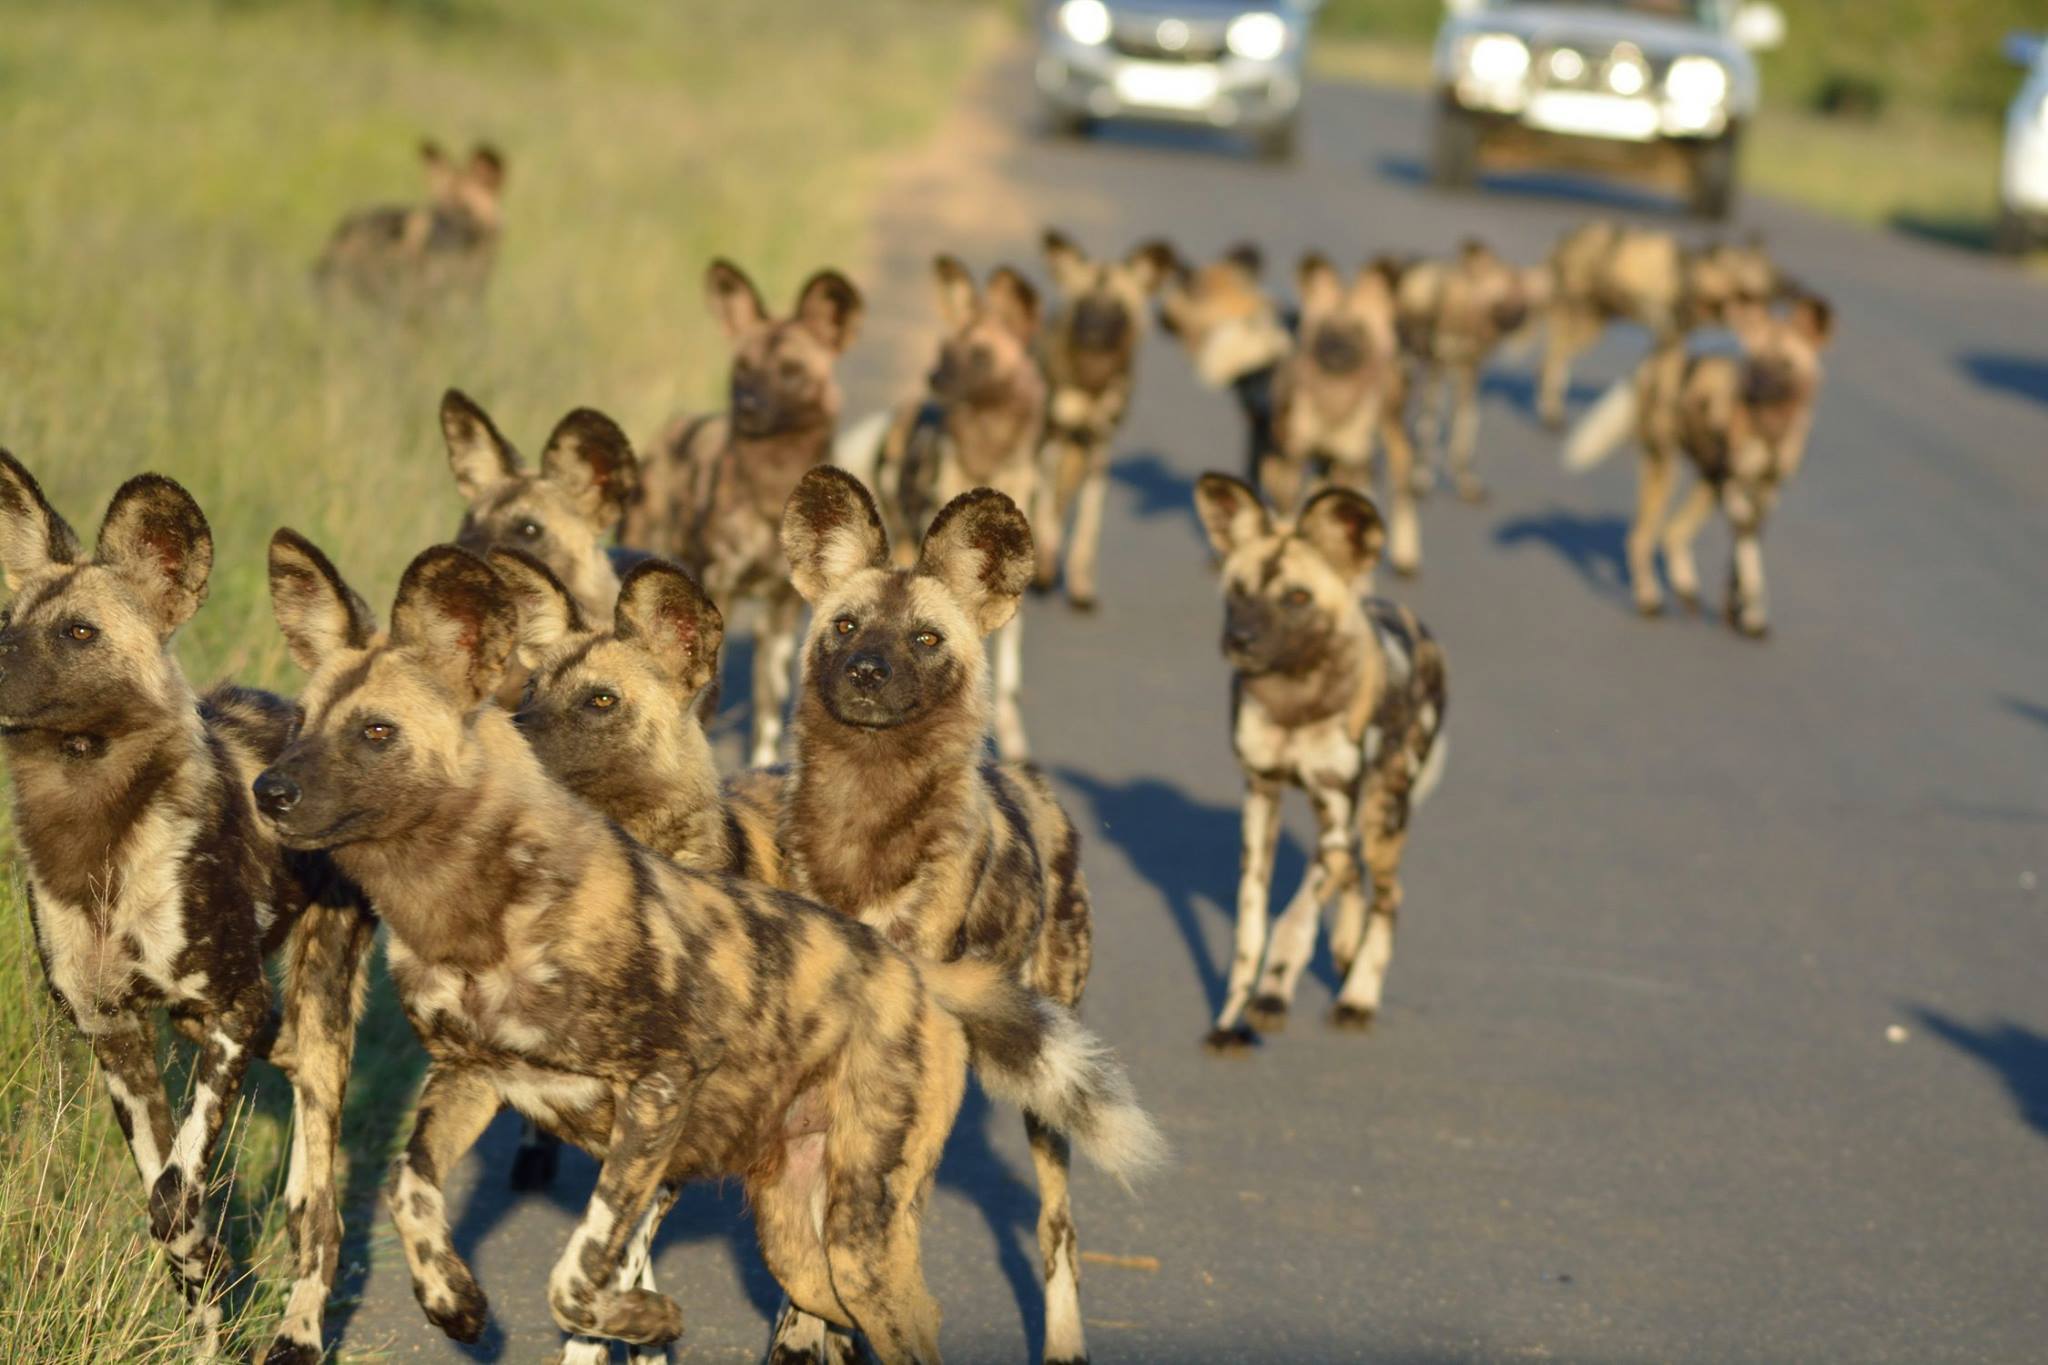 Wild dogs on Kruger tar road